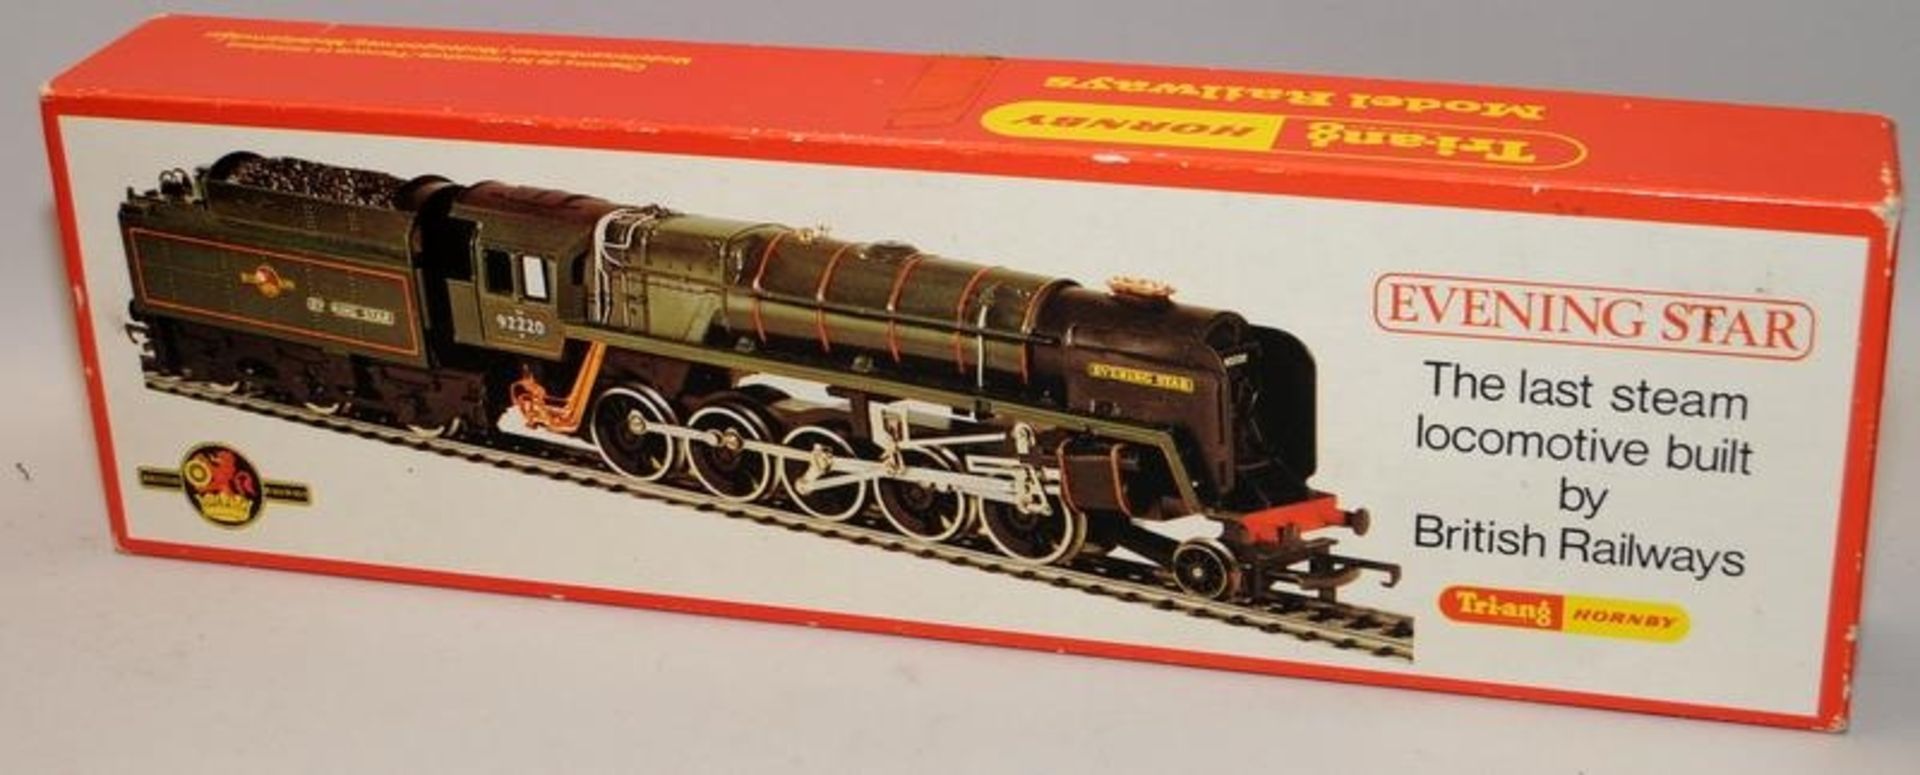 Hornby OO gauge BR Locomotive Evening Star ref:R861. Boxed